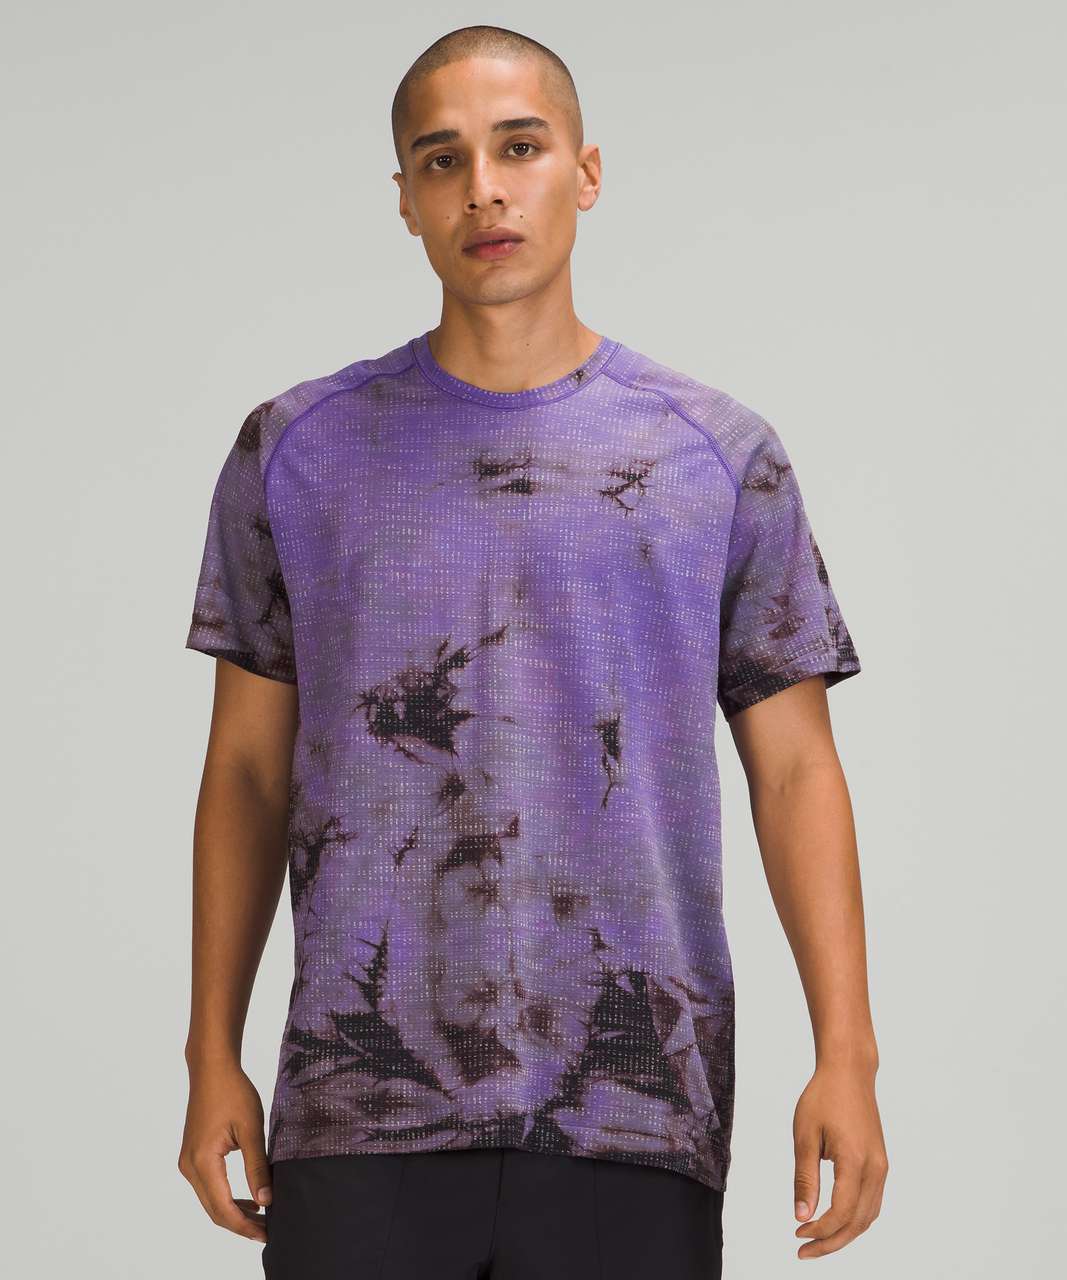 Lululemon Metal Vent Tech Short Sleeve Shirt 2.0 - Disconnect Marble Dye Petrol Purple / Black Granite